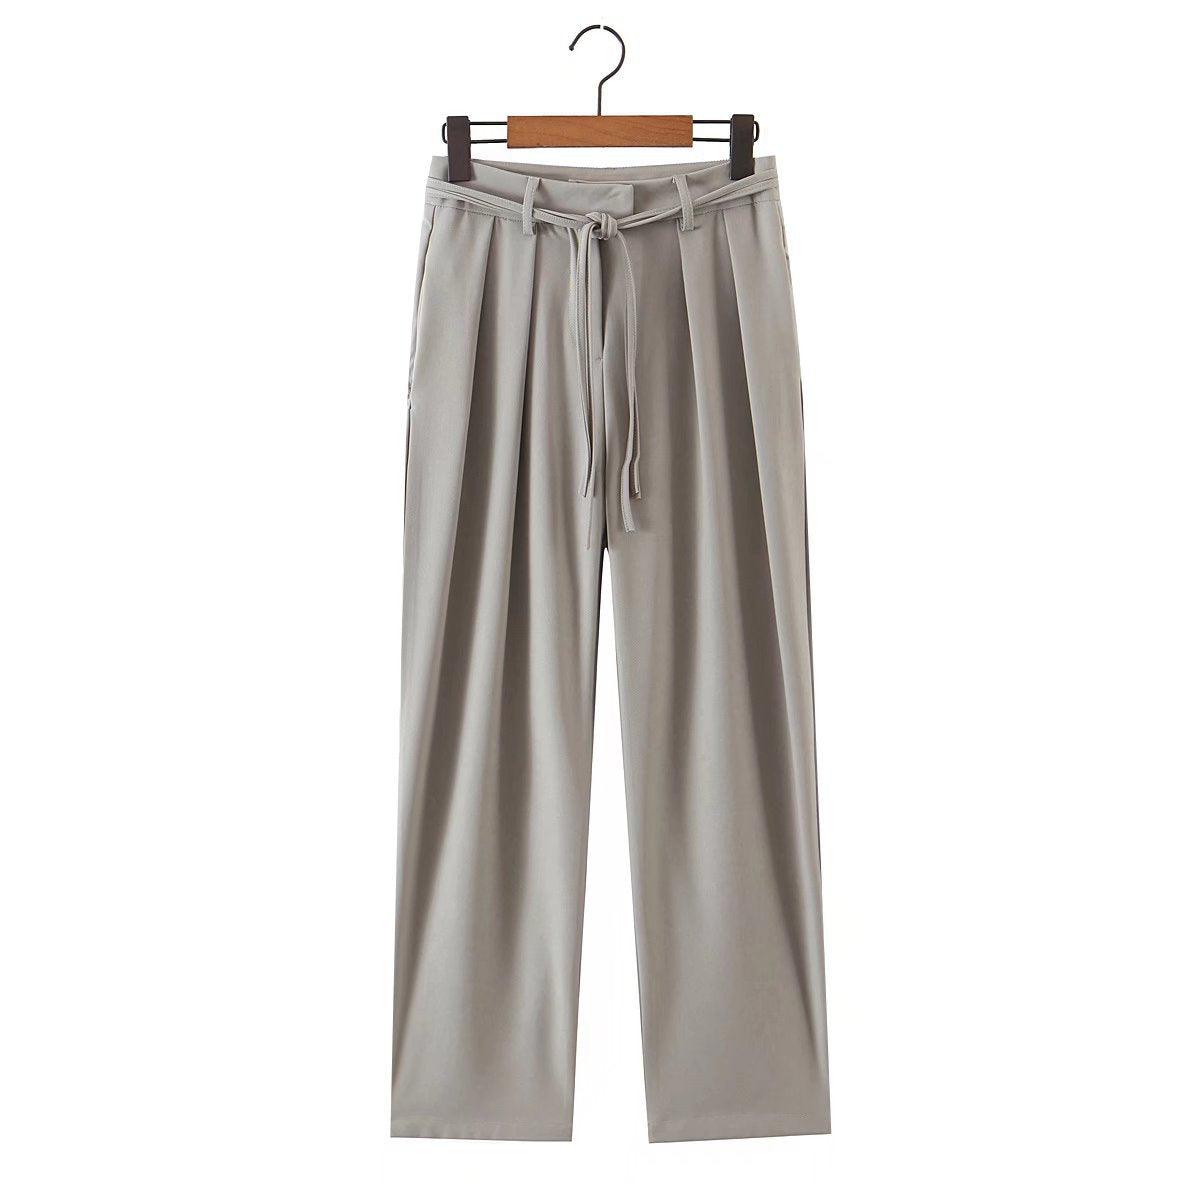 Gray Retro Straight Pants Suit - L & M Kee, LLC